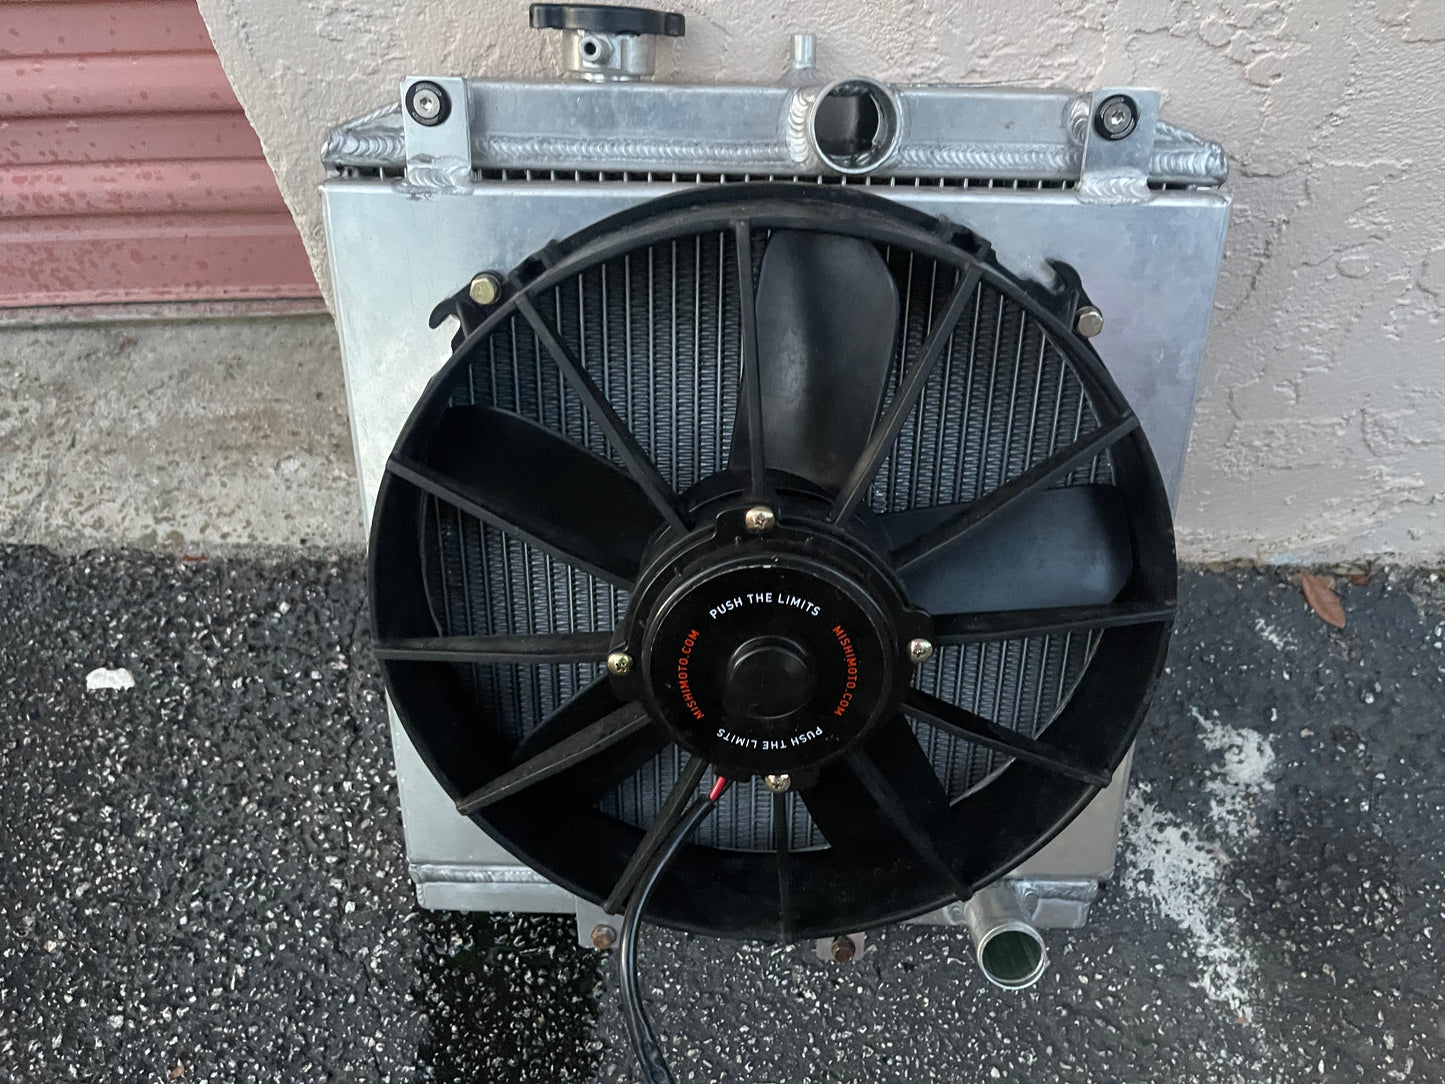 Skunk2 radiator with mishimoto fan.